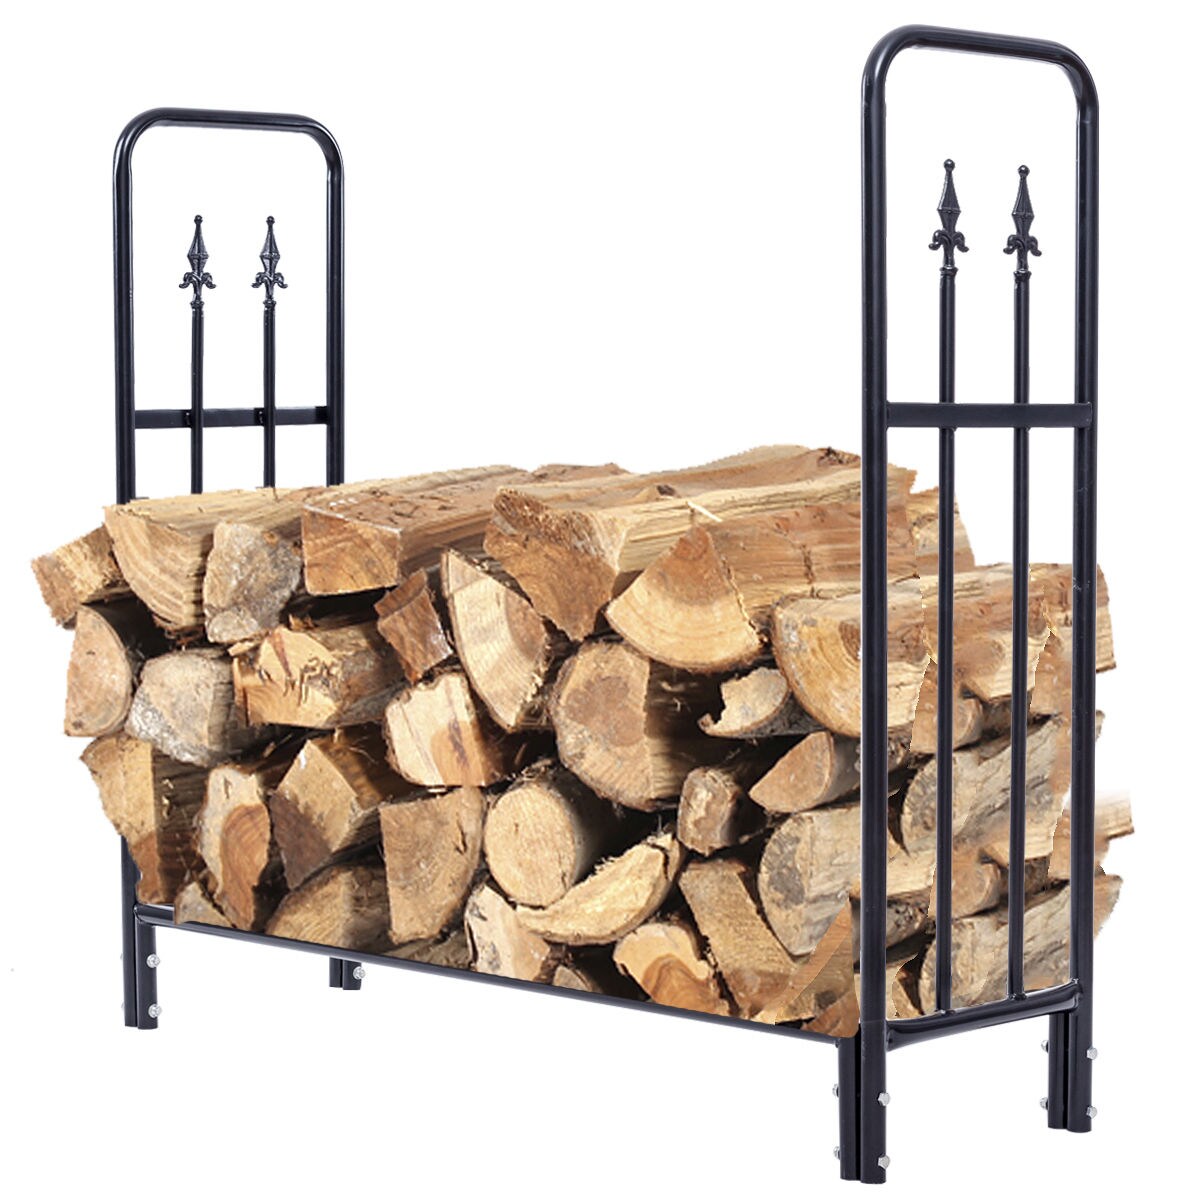 Costway 4 Feet Outdoor Heavy Duty Steel Firewood Log Rack Wood Storage Holder Black